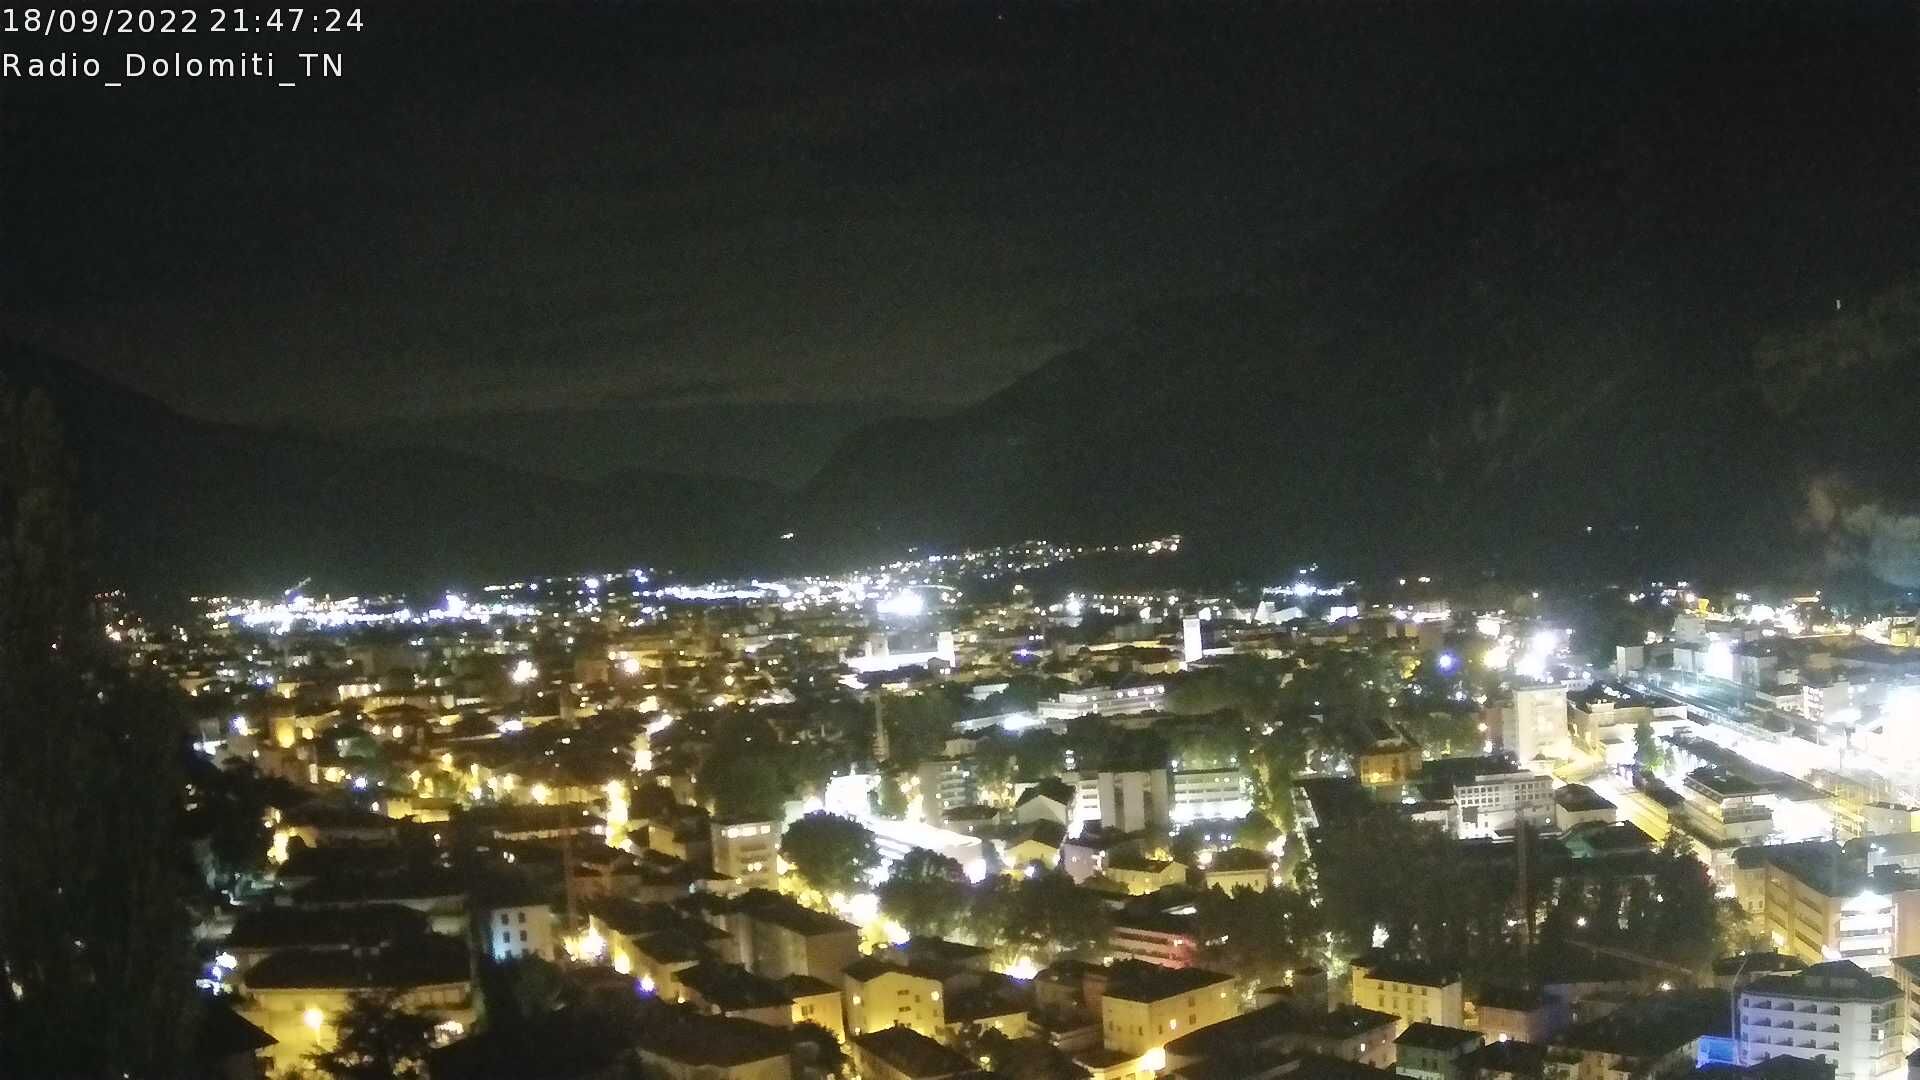 webcam  Trento (TN, 200 m), webcam provincia di Trento, webcam Trentino-Alto Adige, Webcam Alpi - Trentino-Alto Adige